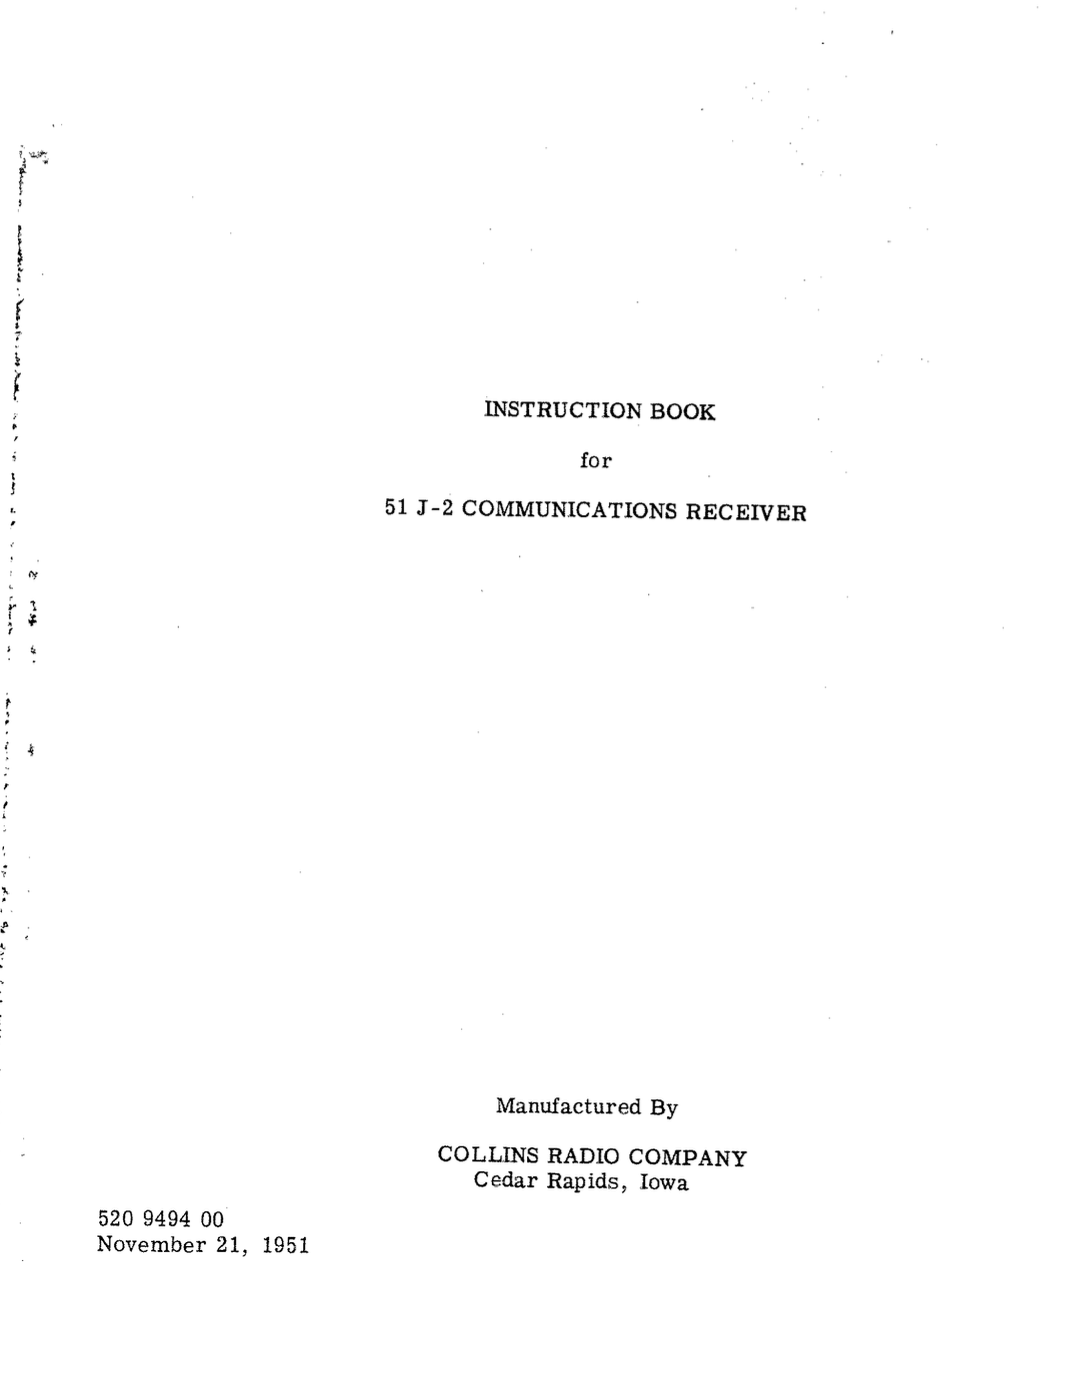 Collins 51J-2 Communications Receiver - Instruction Manual